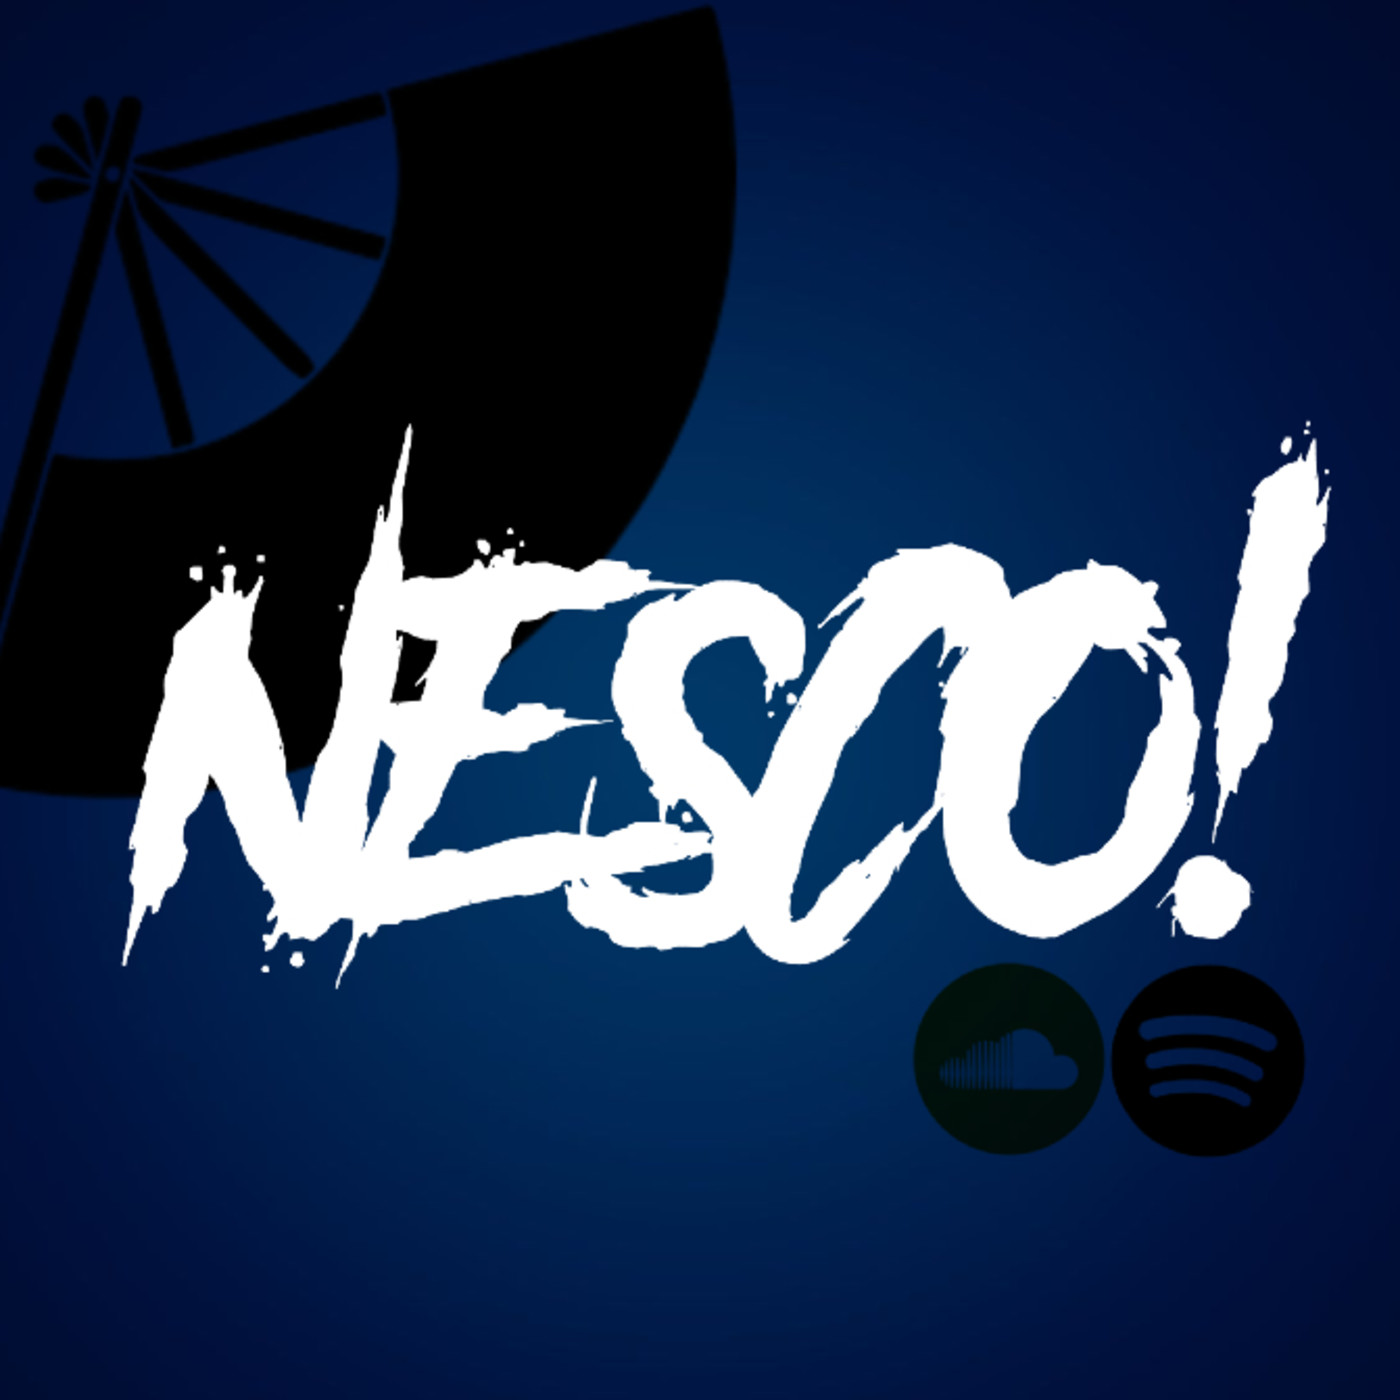 Nesco - Pump It (Vol II)